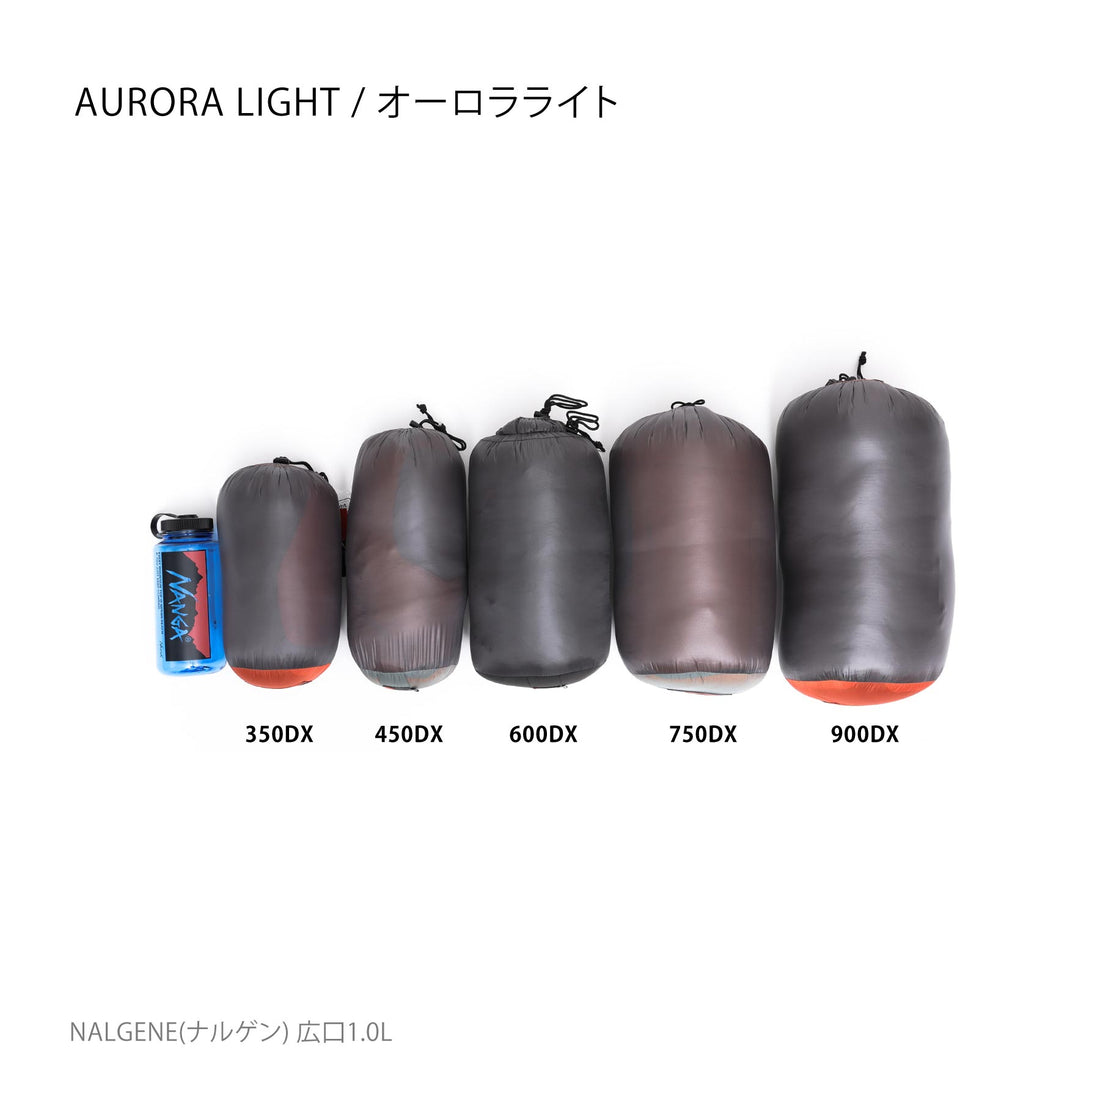 AURORA light 350 DX / オーロラライト350DX